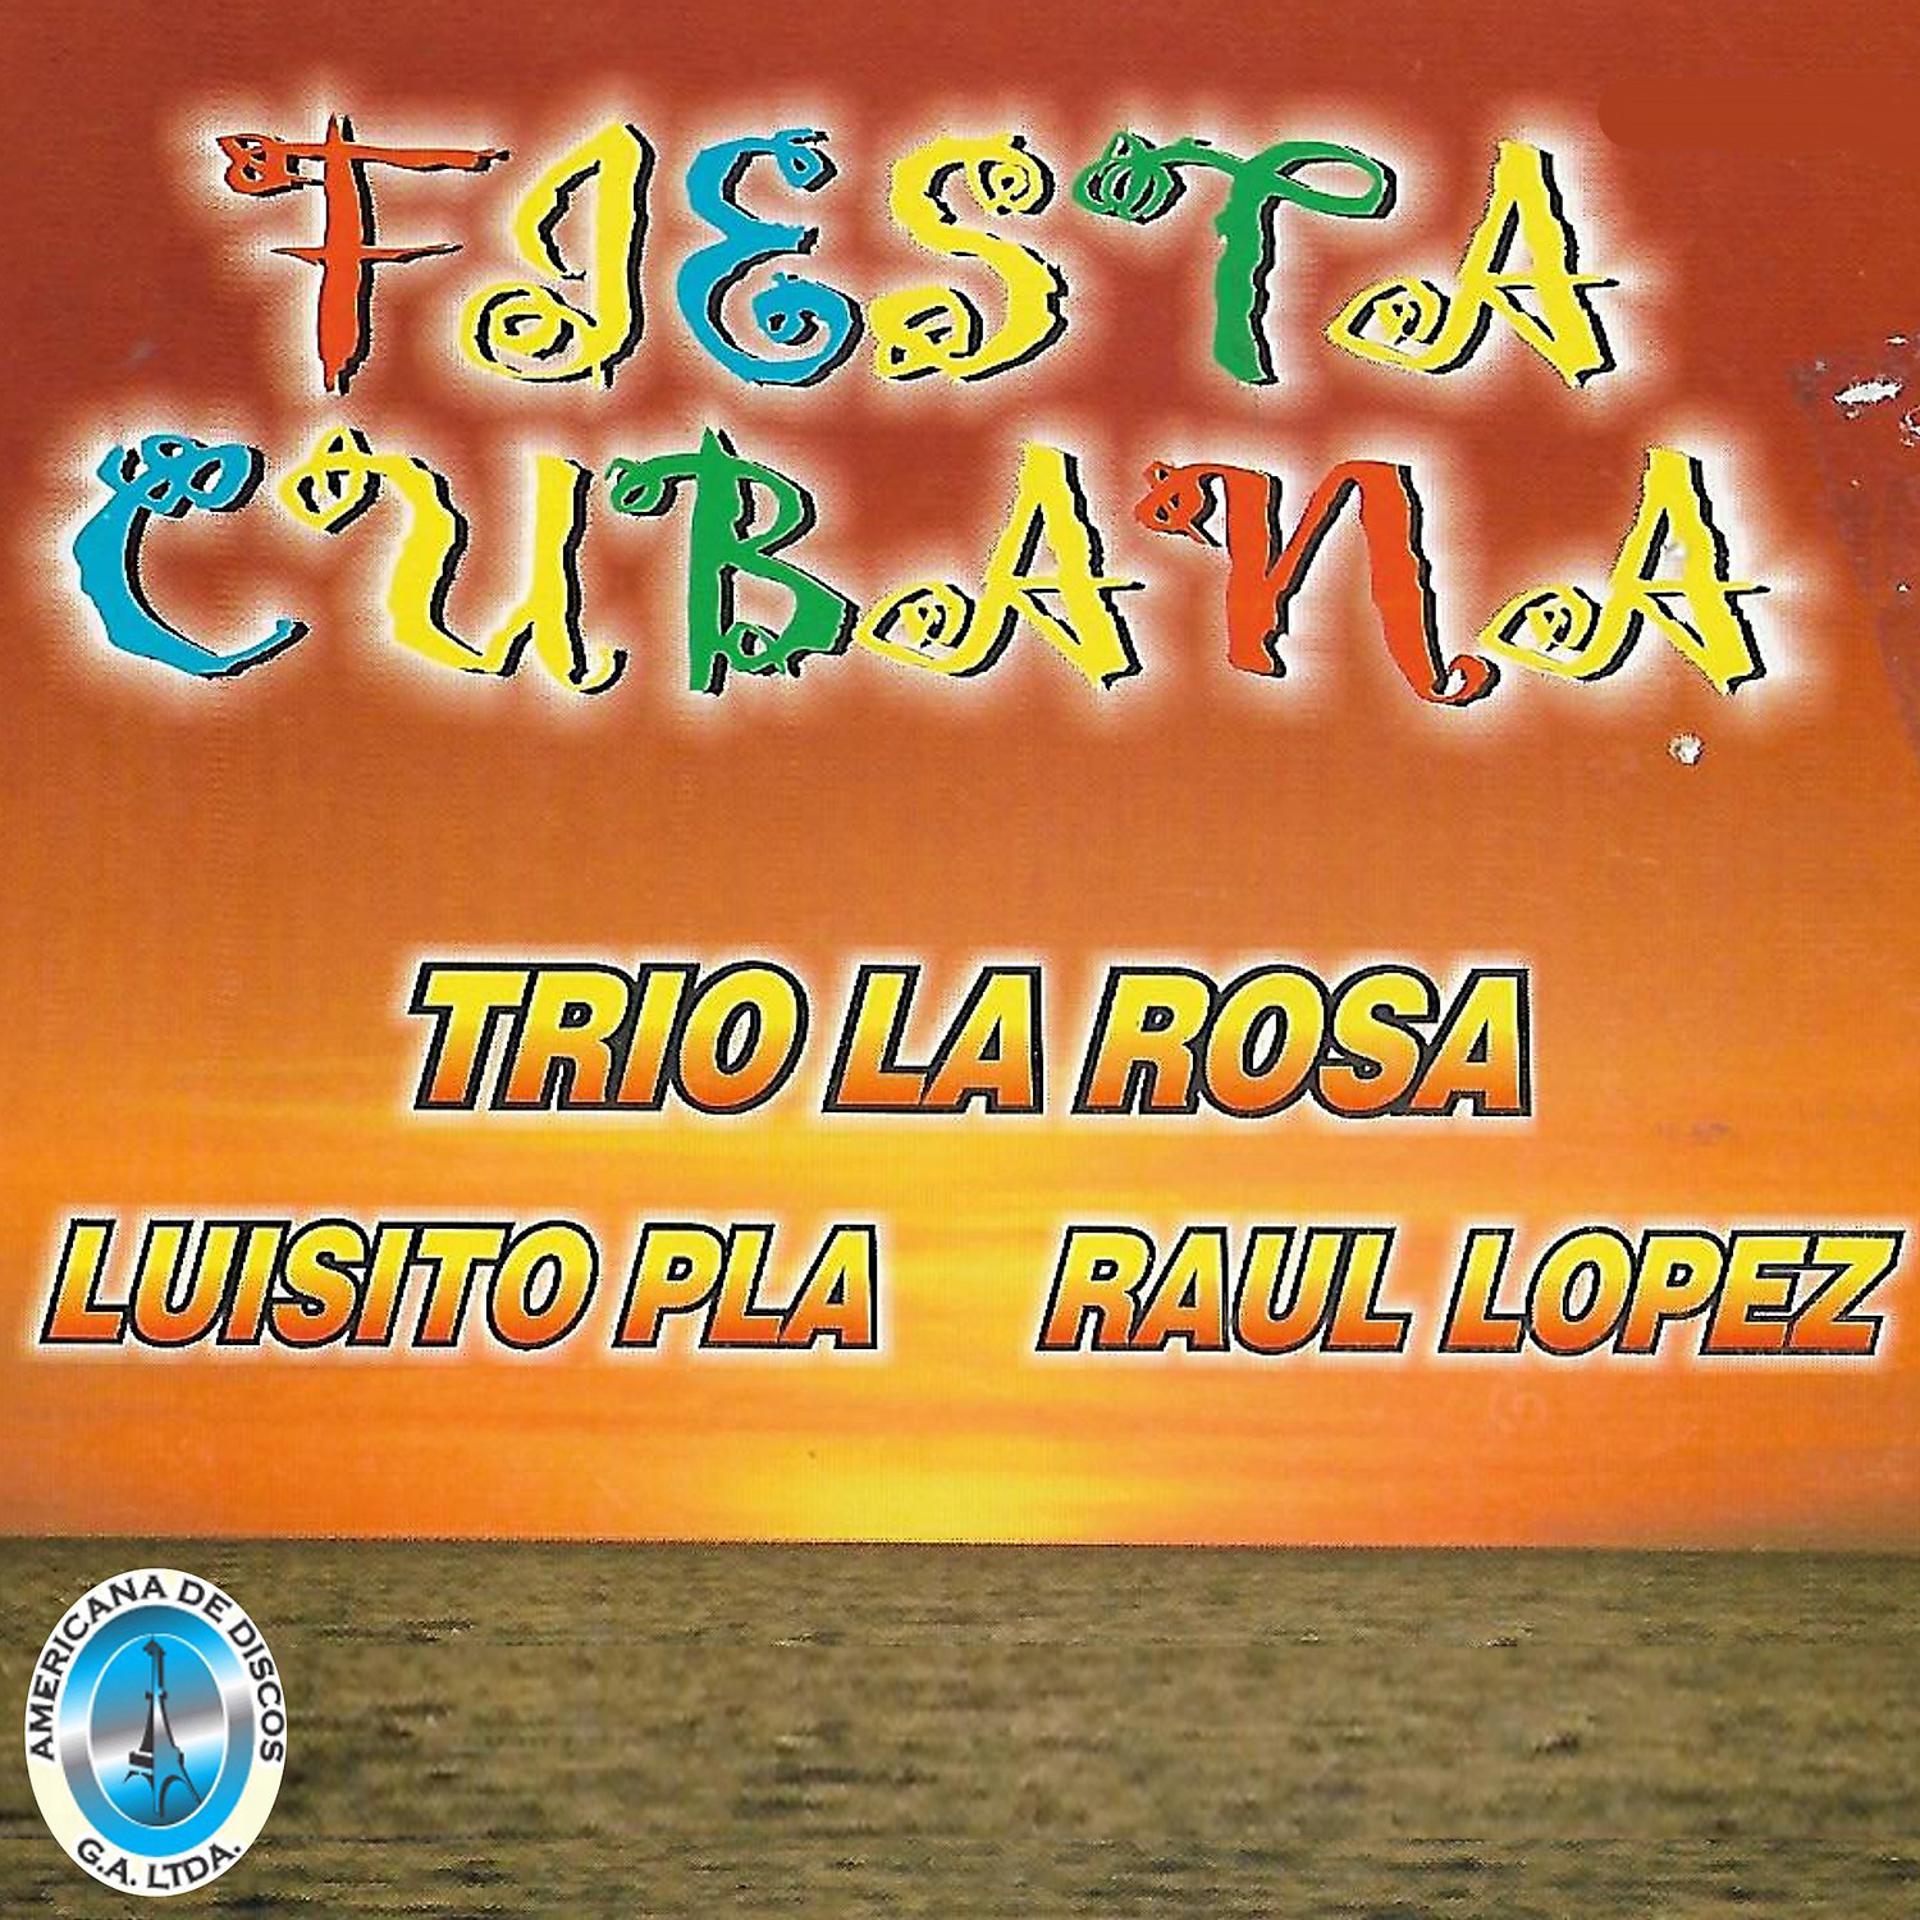 Постер альбома Fiesta Cubana